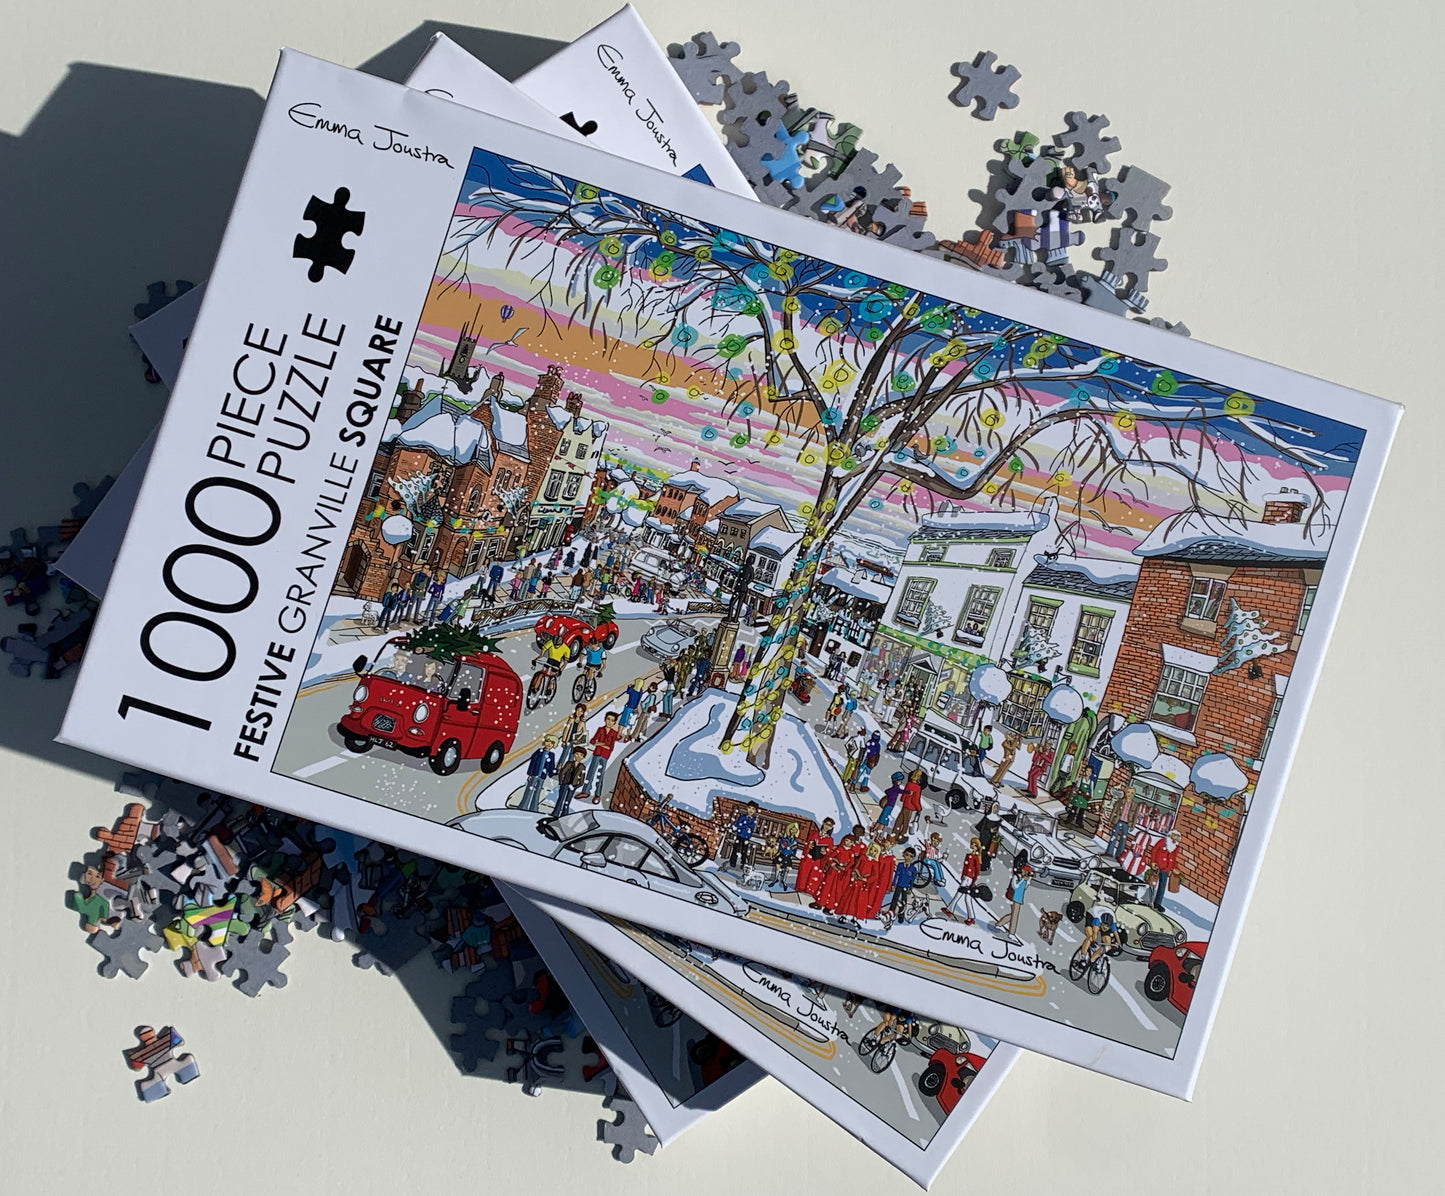 Festive Granville Square 1,000 piece jigsaw puzzle